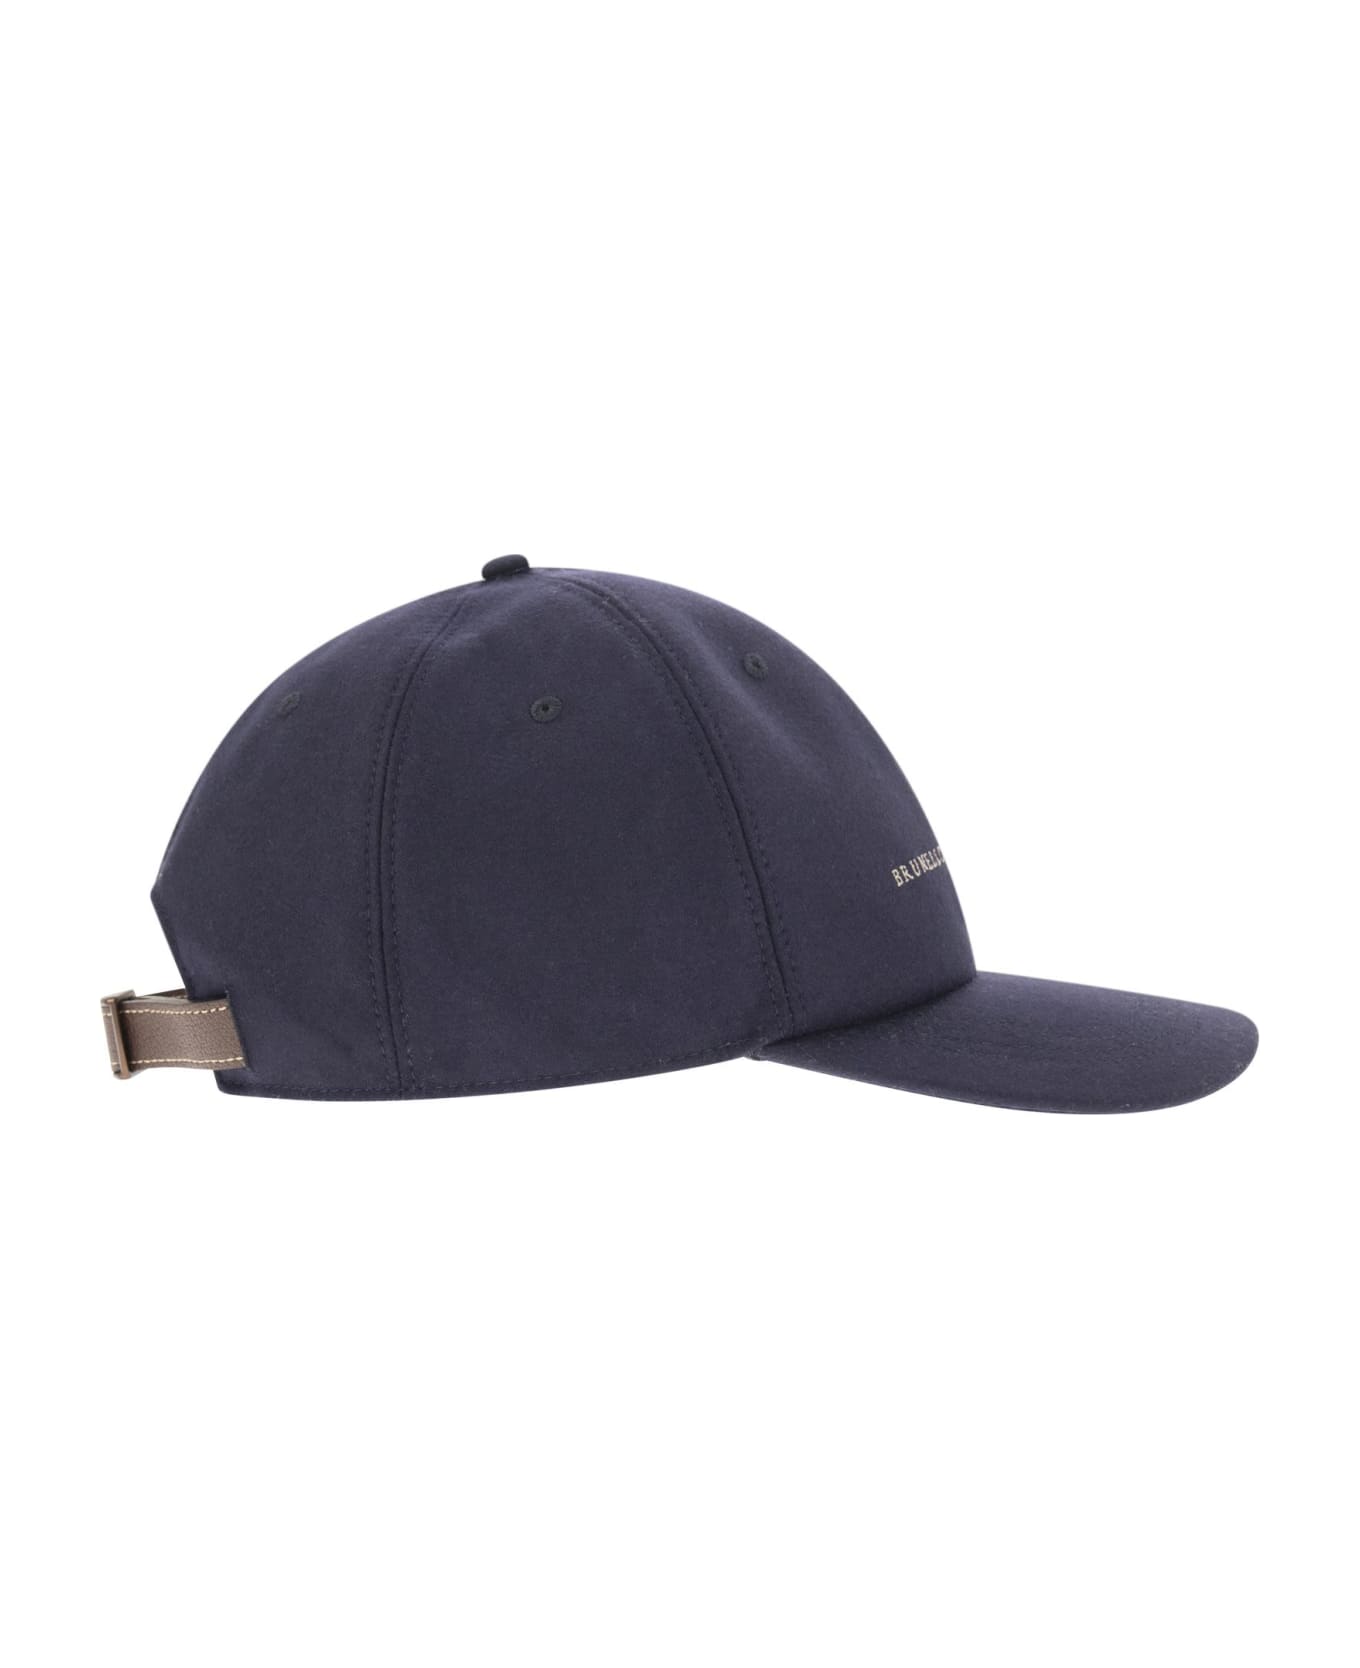 Brunello Cucinelli Cashmere And Silk Baseball Cap With Embroidery - Blue 帽子